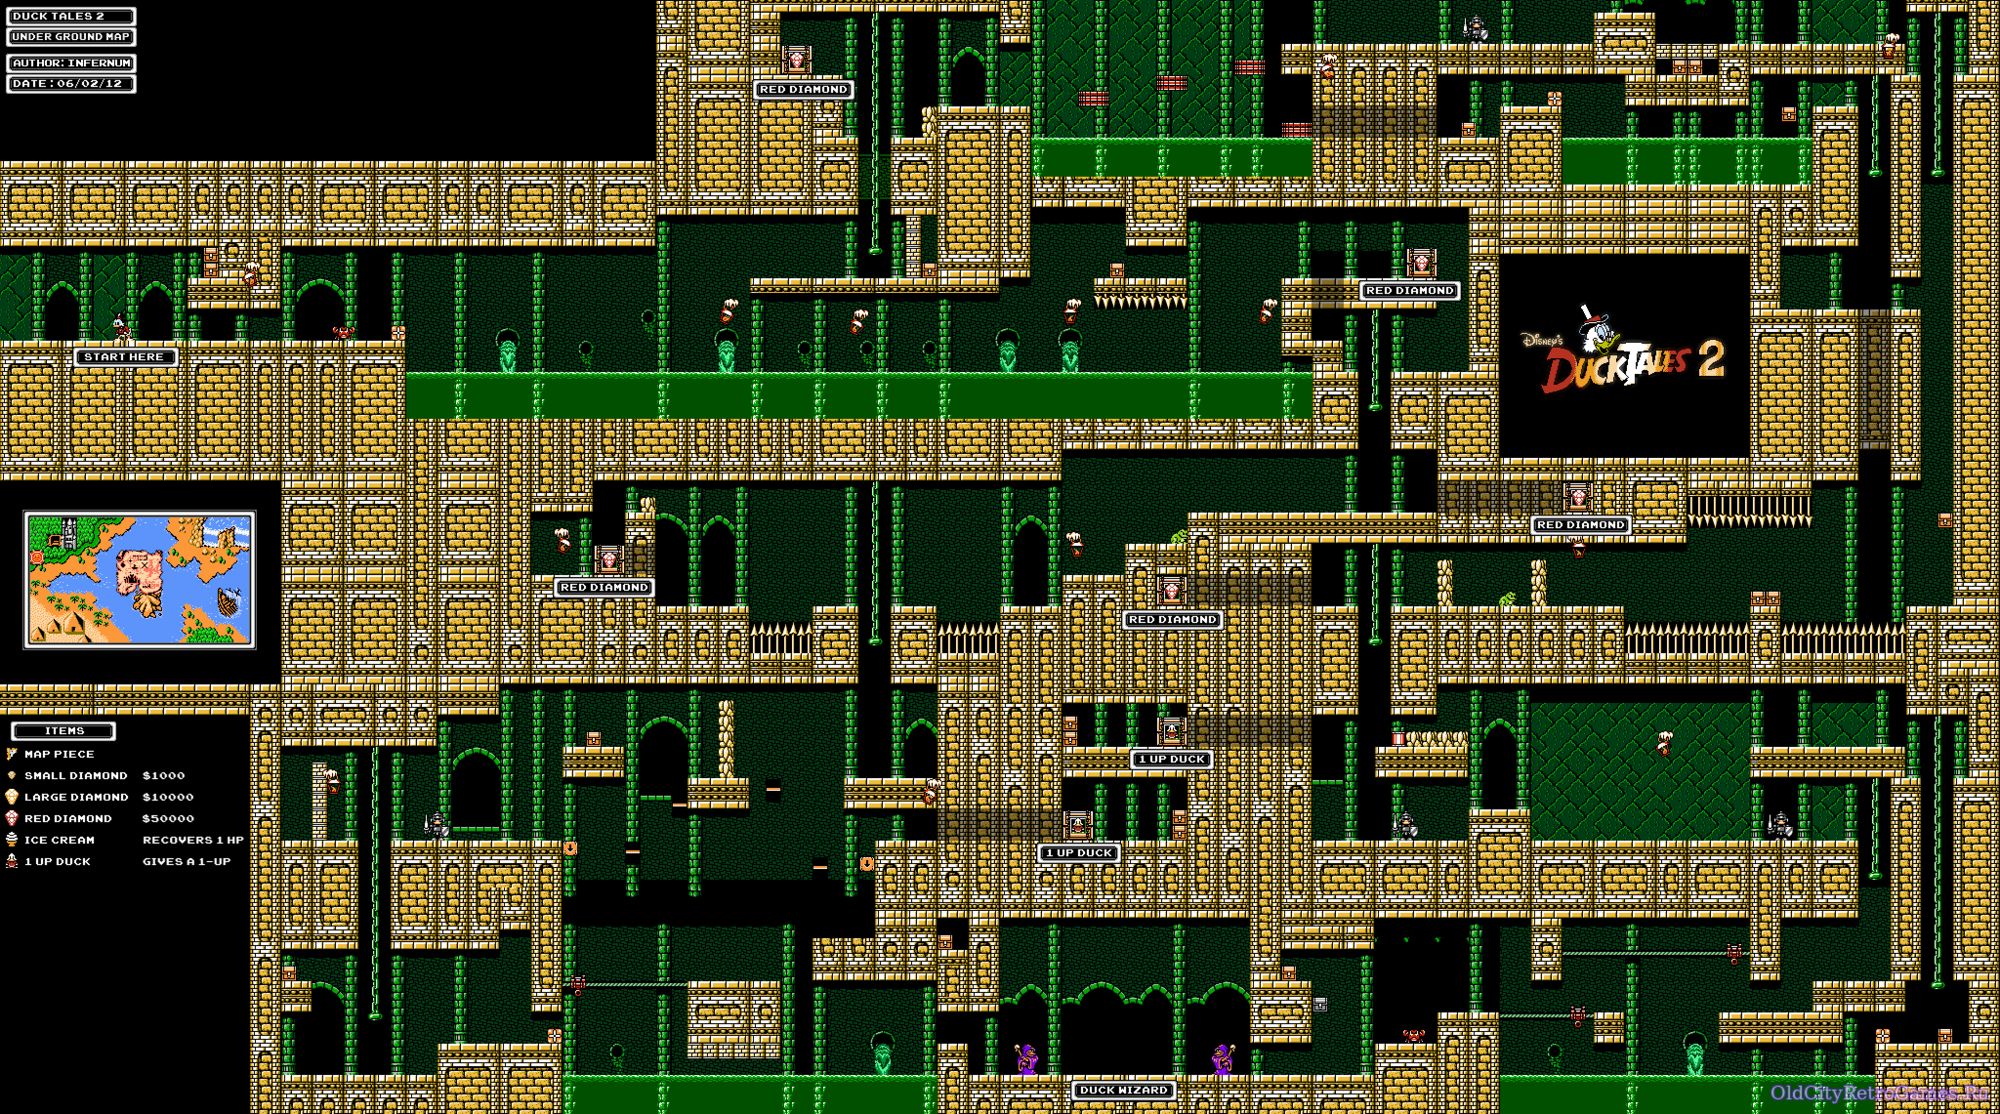 DuckTales 2 - basement map